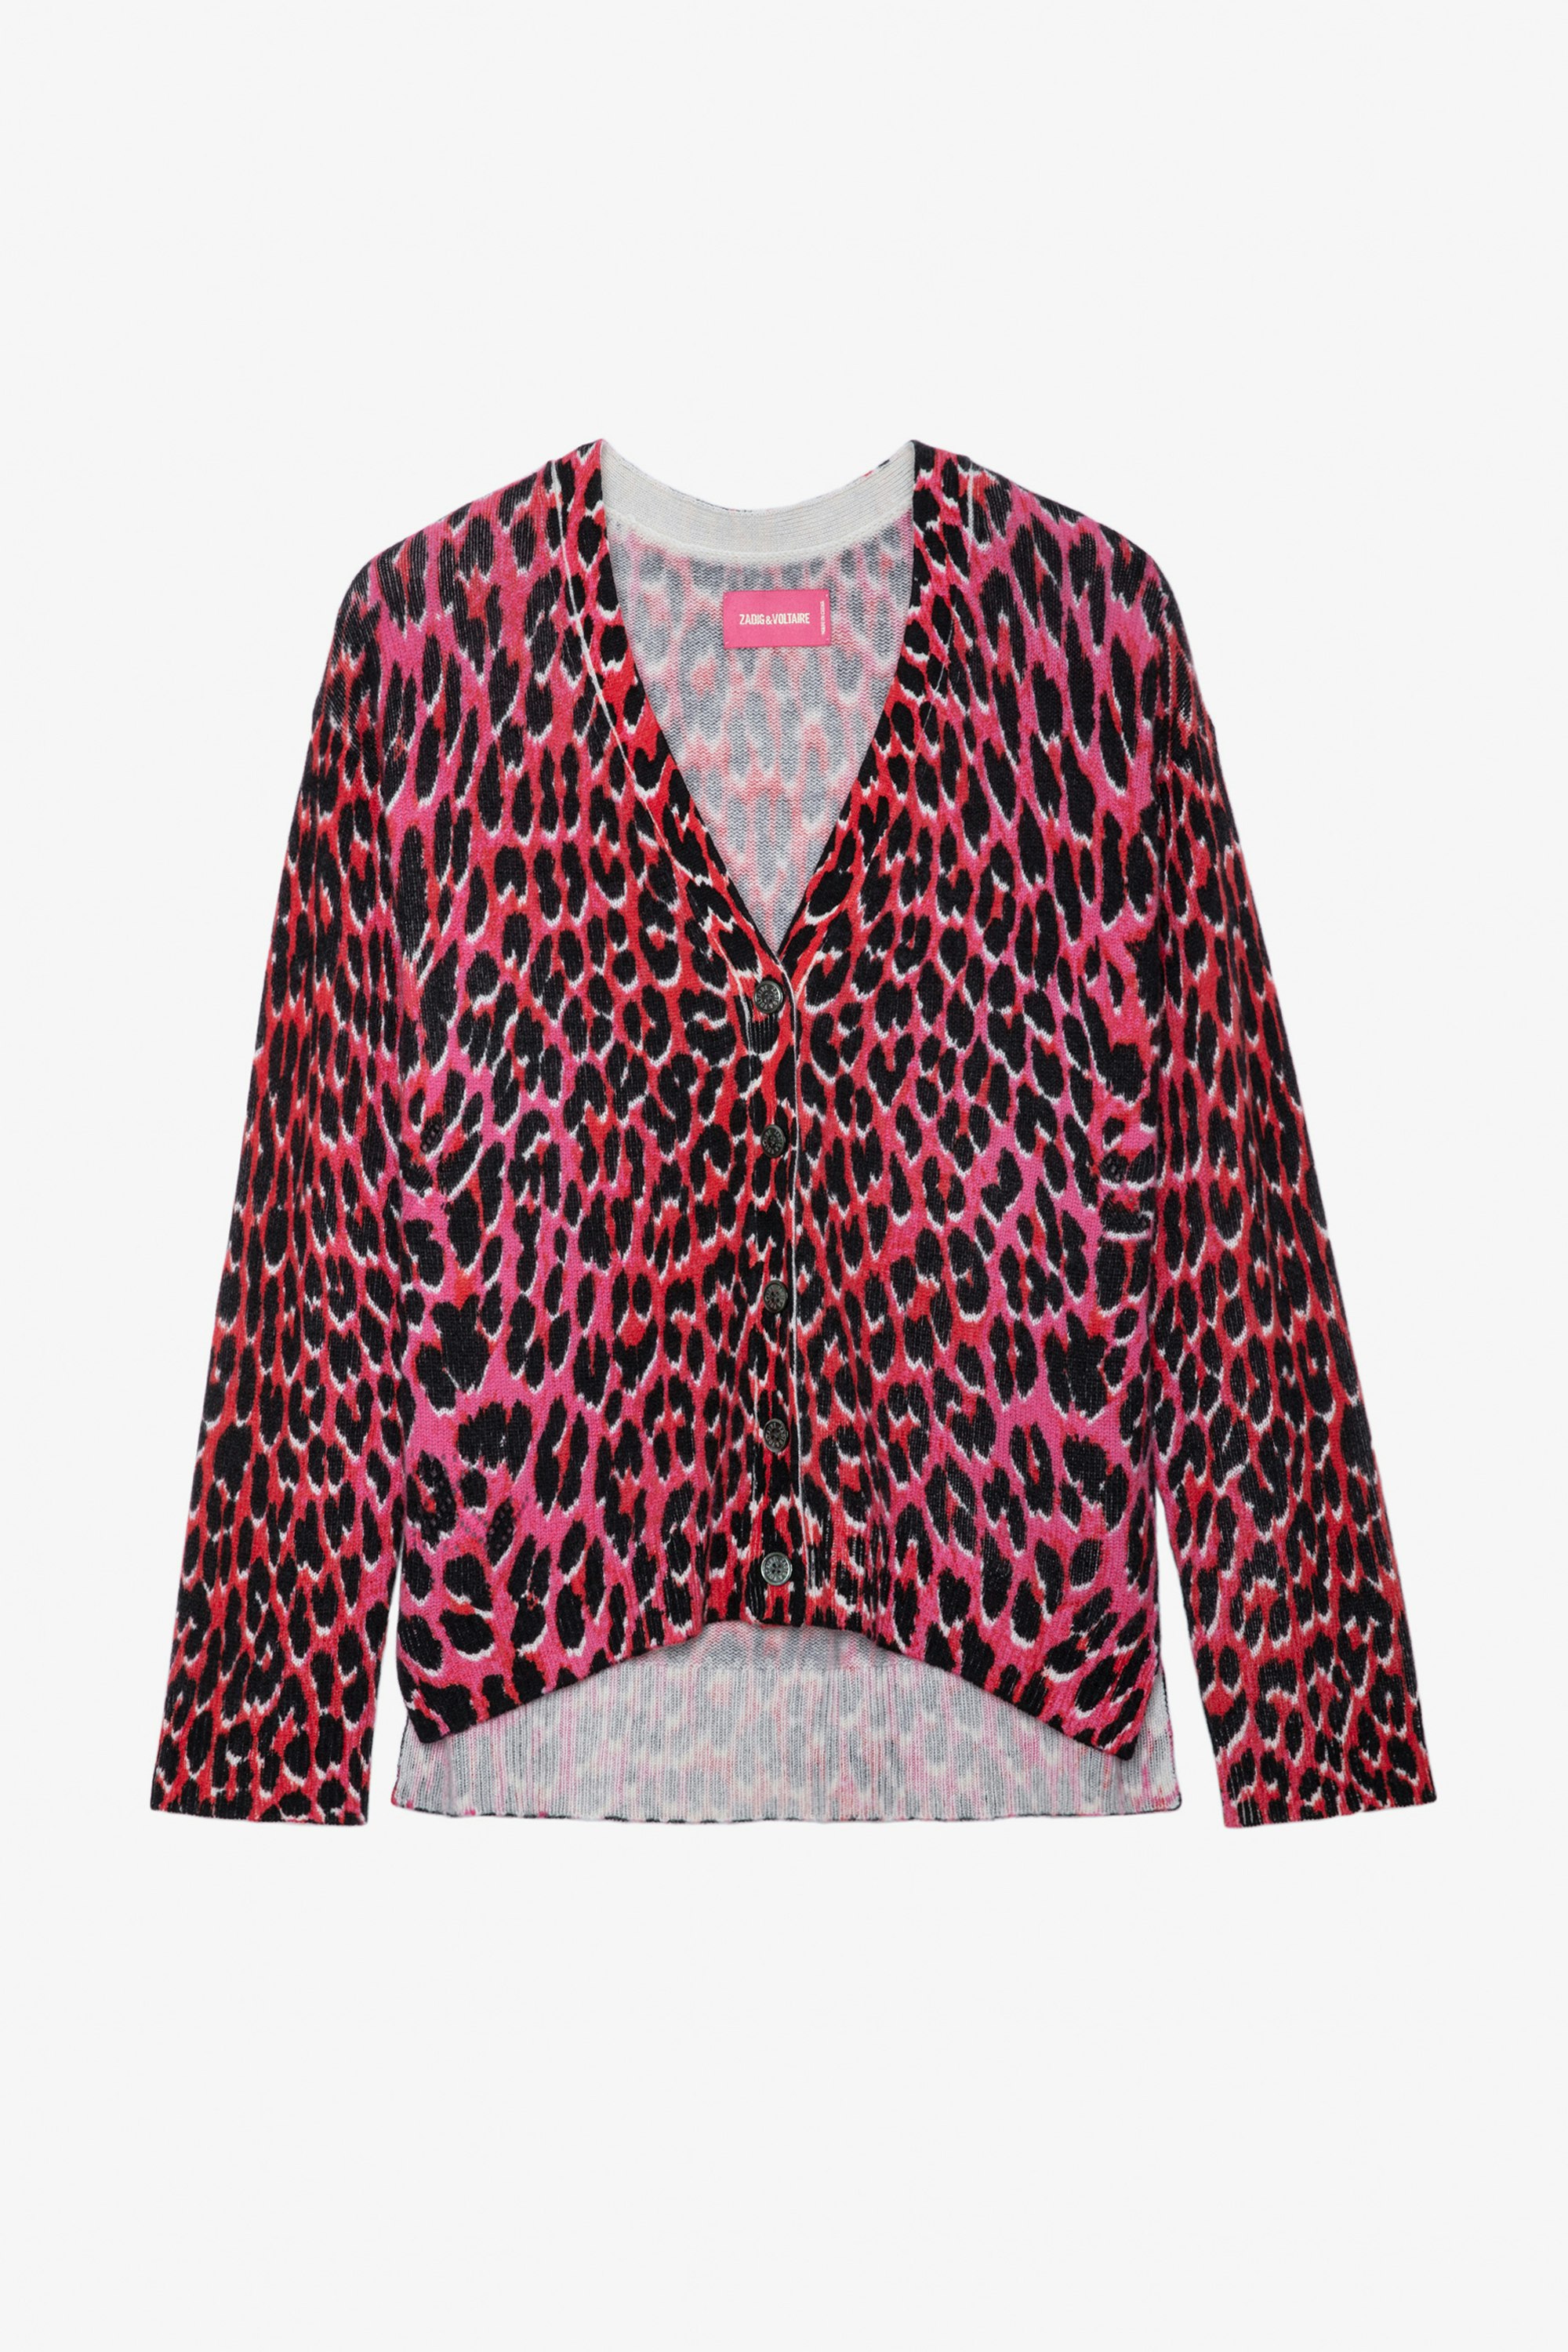 Mirka Leopard Cashmere Cardigan - Women’s pink leopard-print cashmere cardigan.